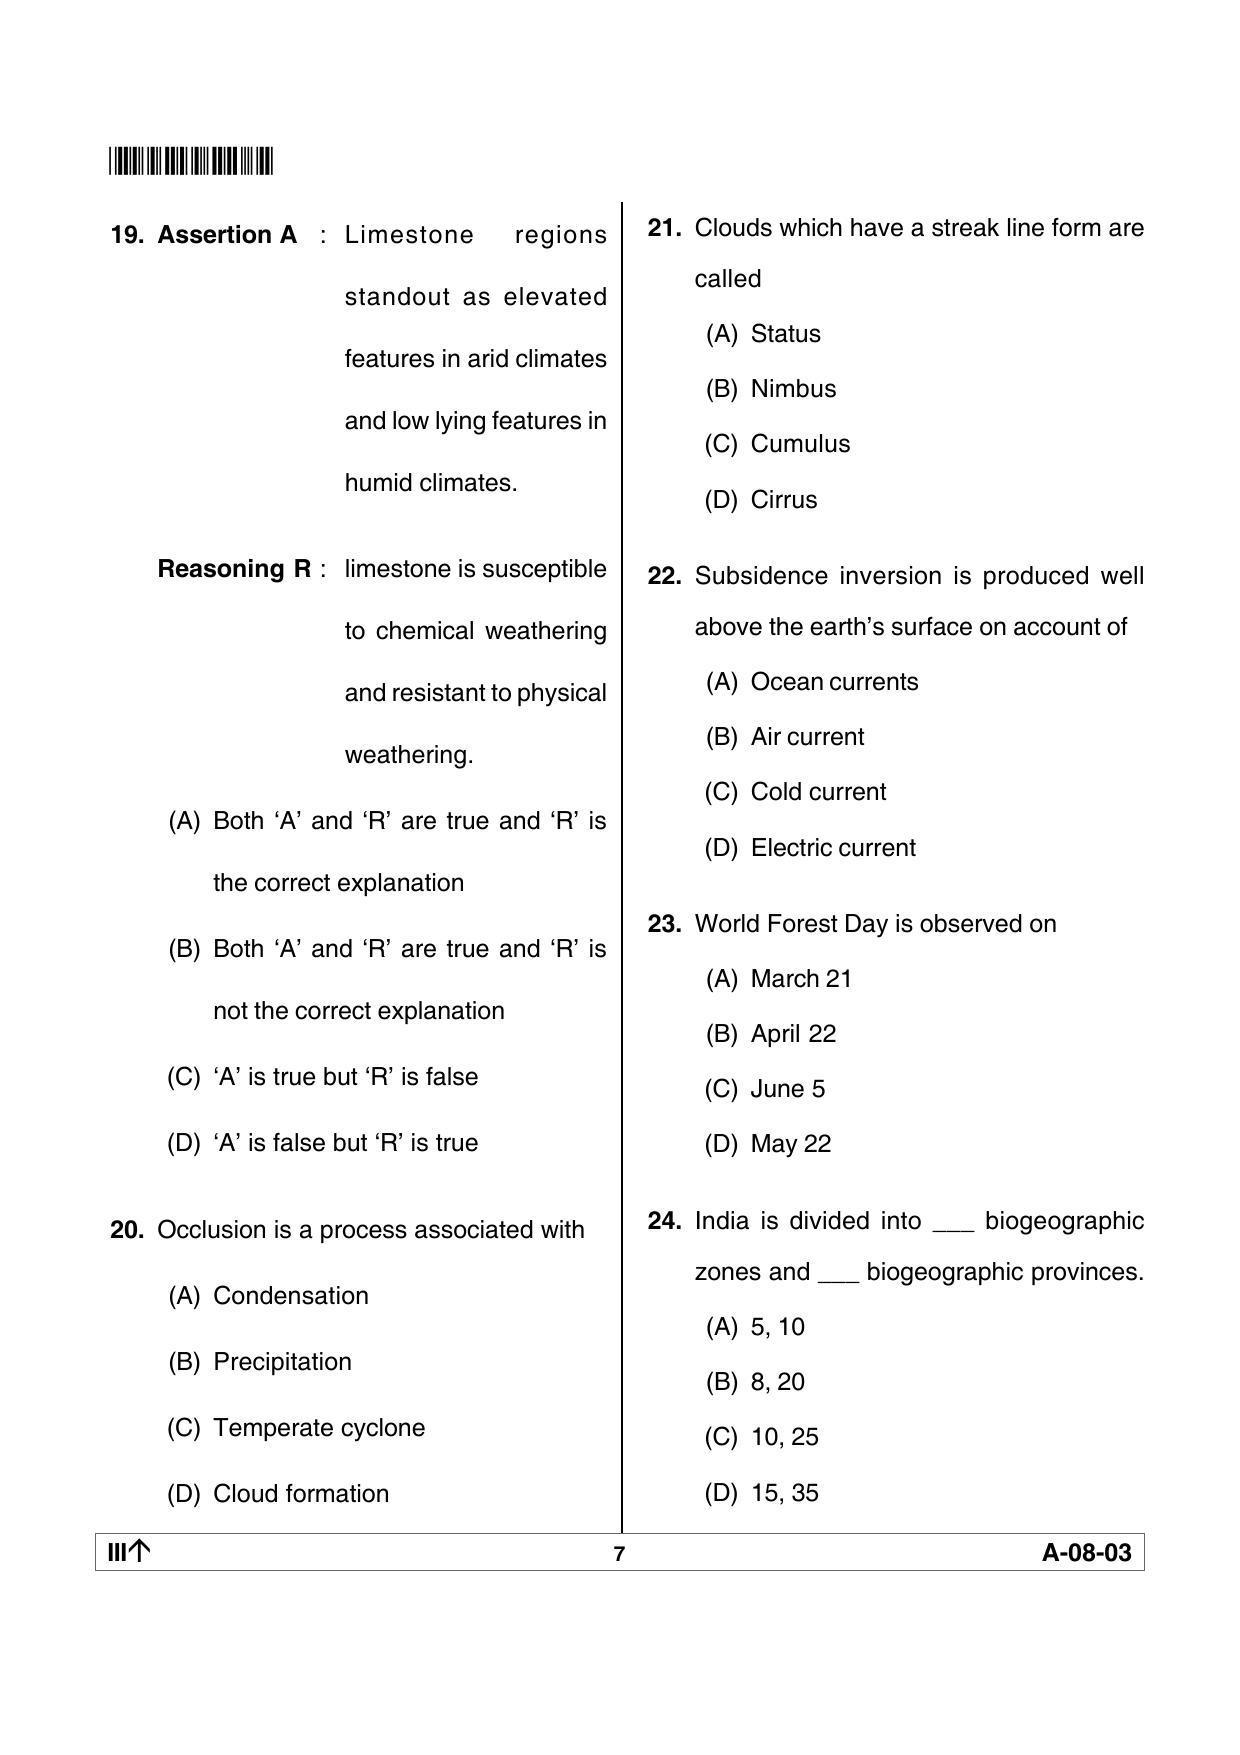 LUVAS Clerk Model Papers - Environment.pdf - Page 12